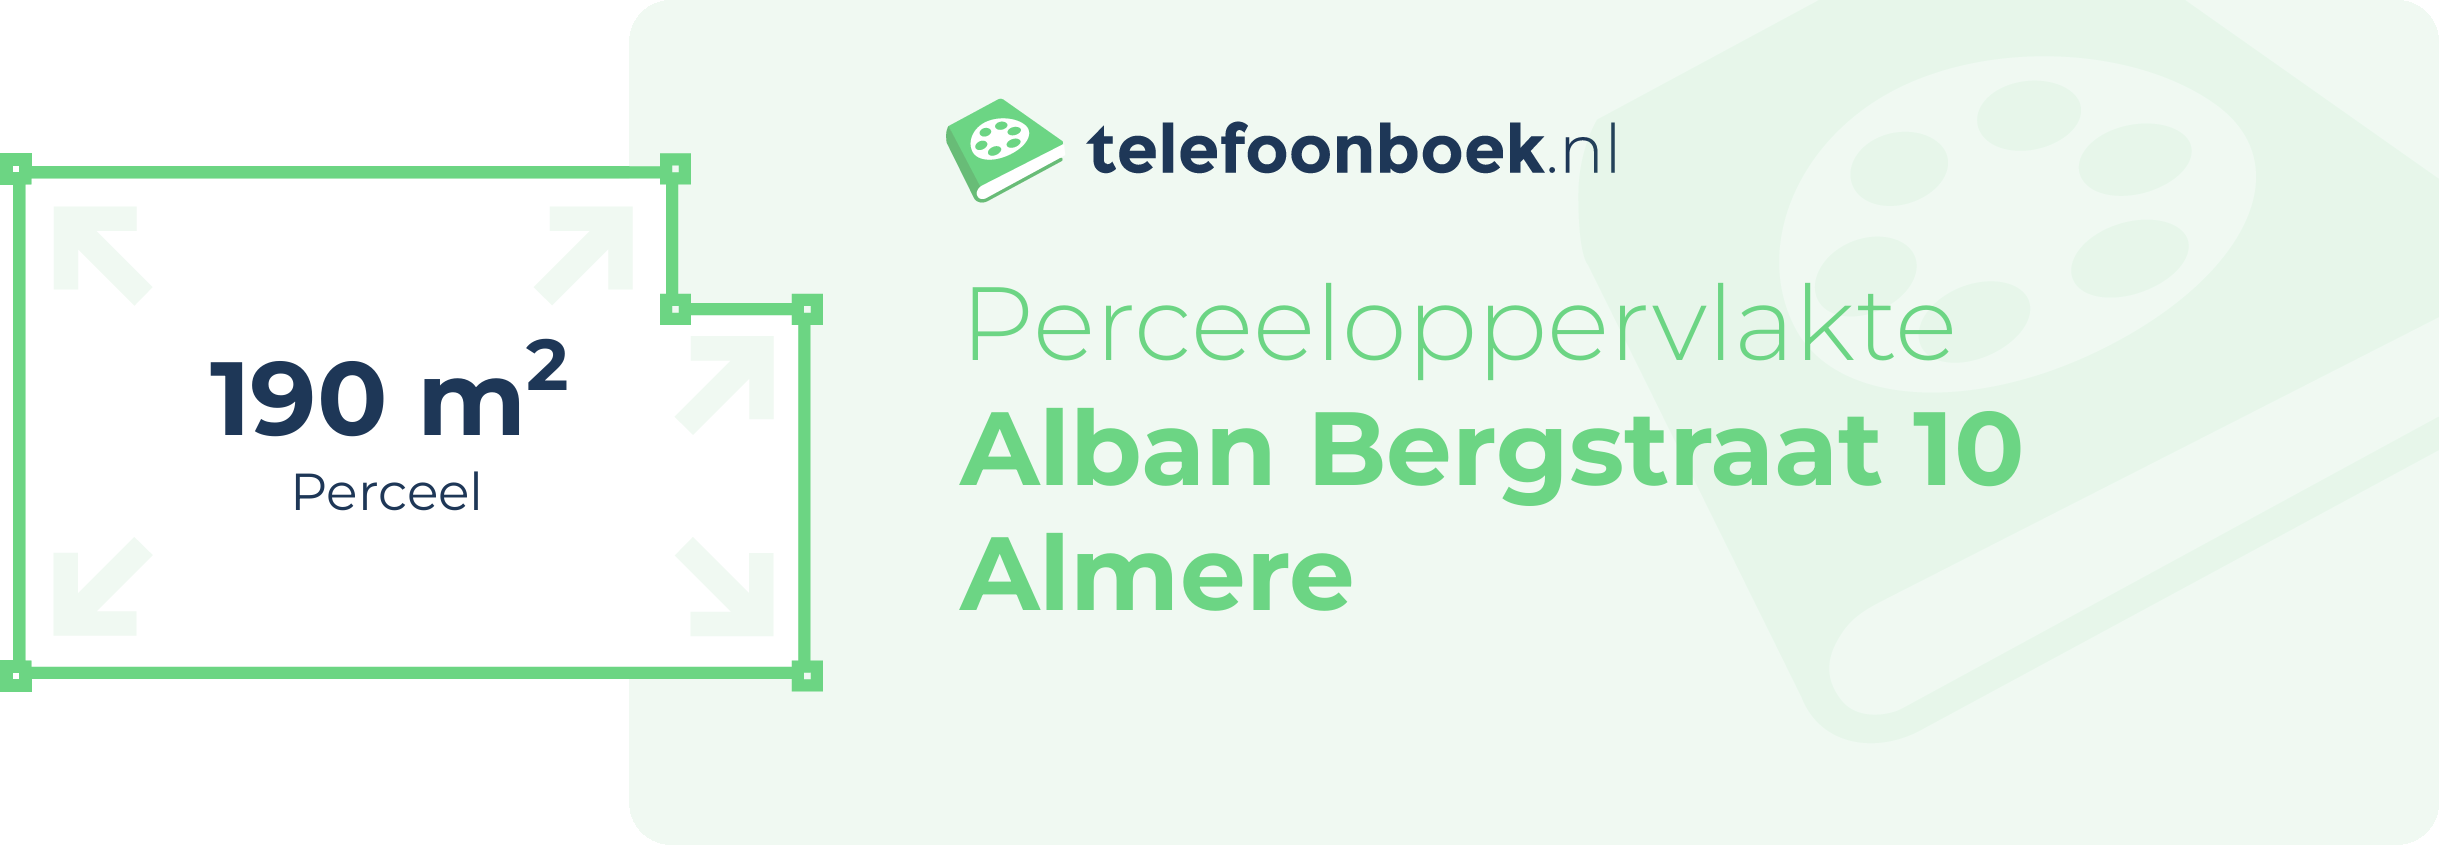 Perceeloppervlakte Alban Bergstraat 10 Almere